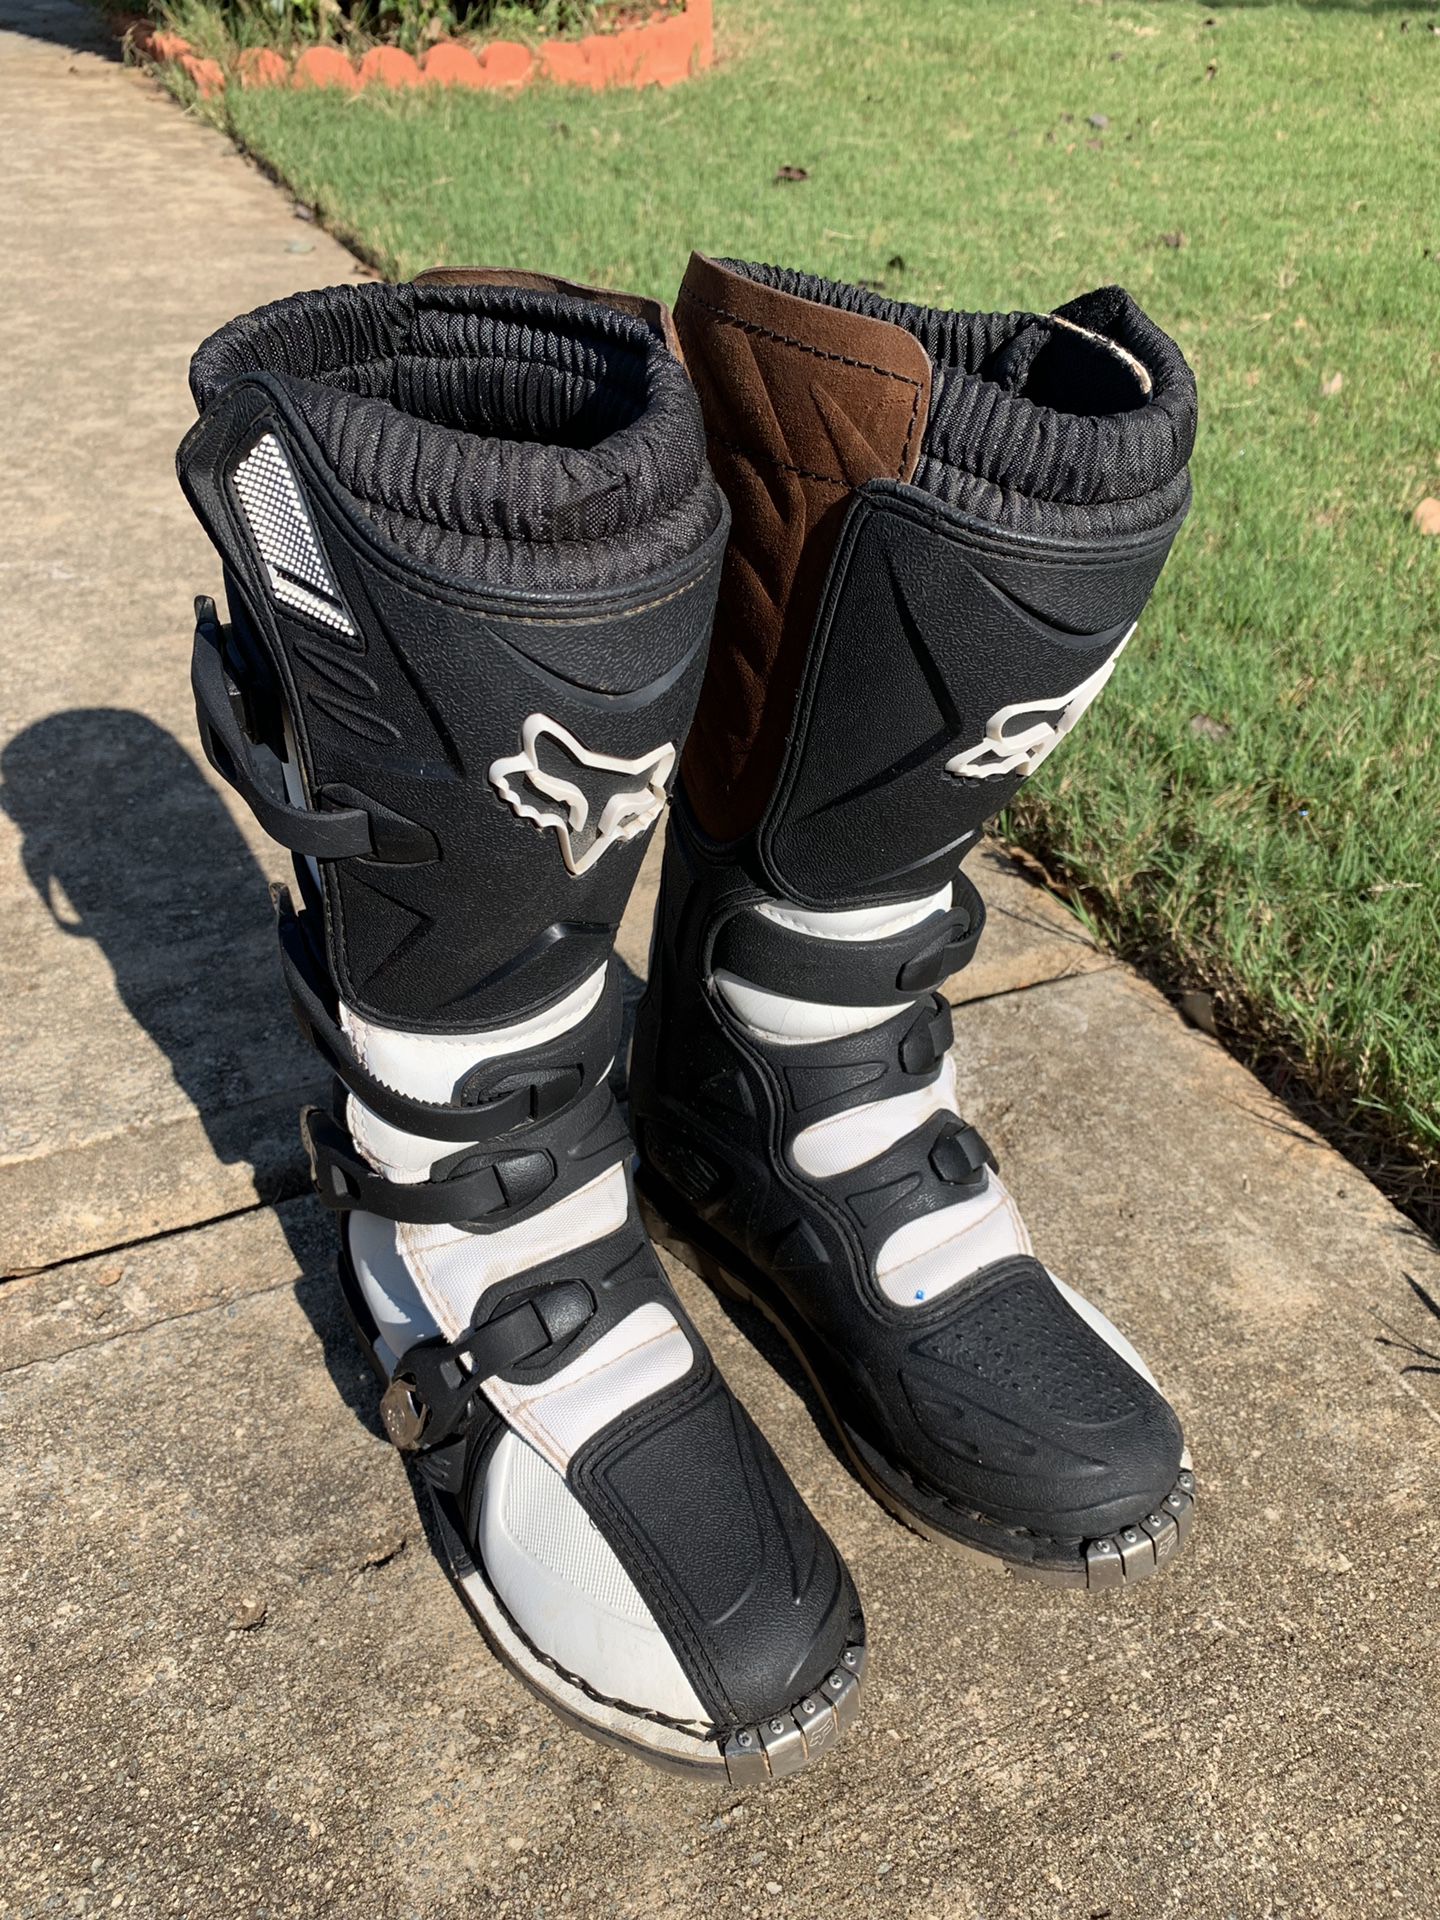 Fox Girls tracker boots Size W7 $40 price Firm